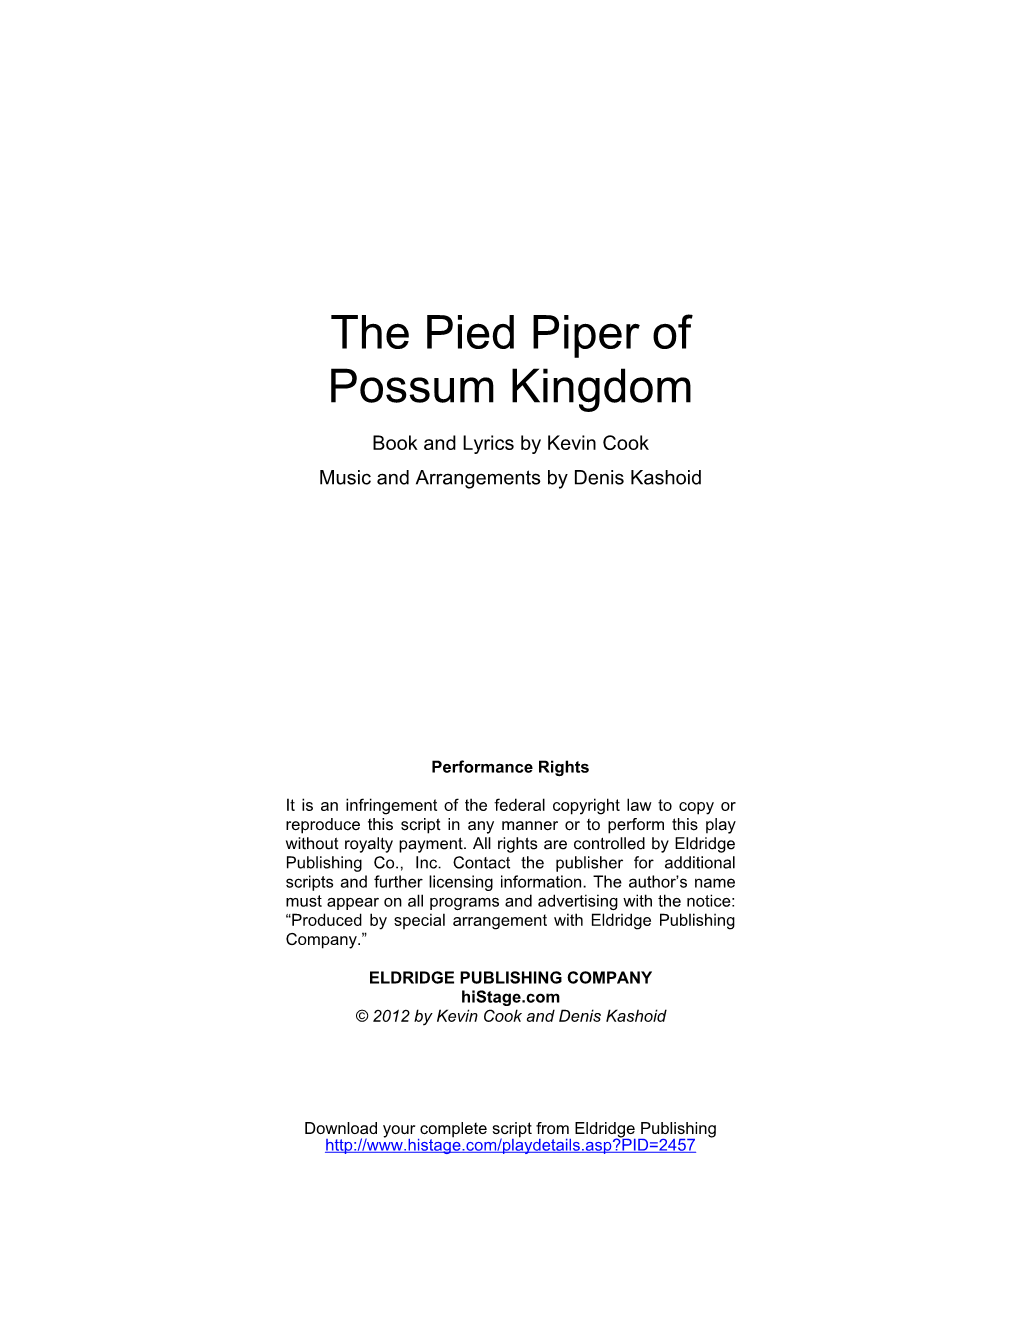 The Pied Piper of Possum Kingdom